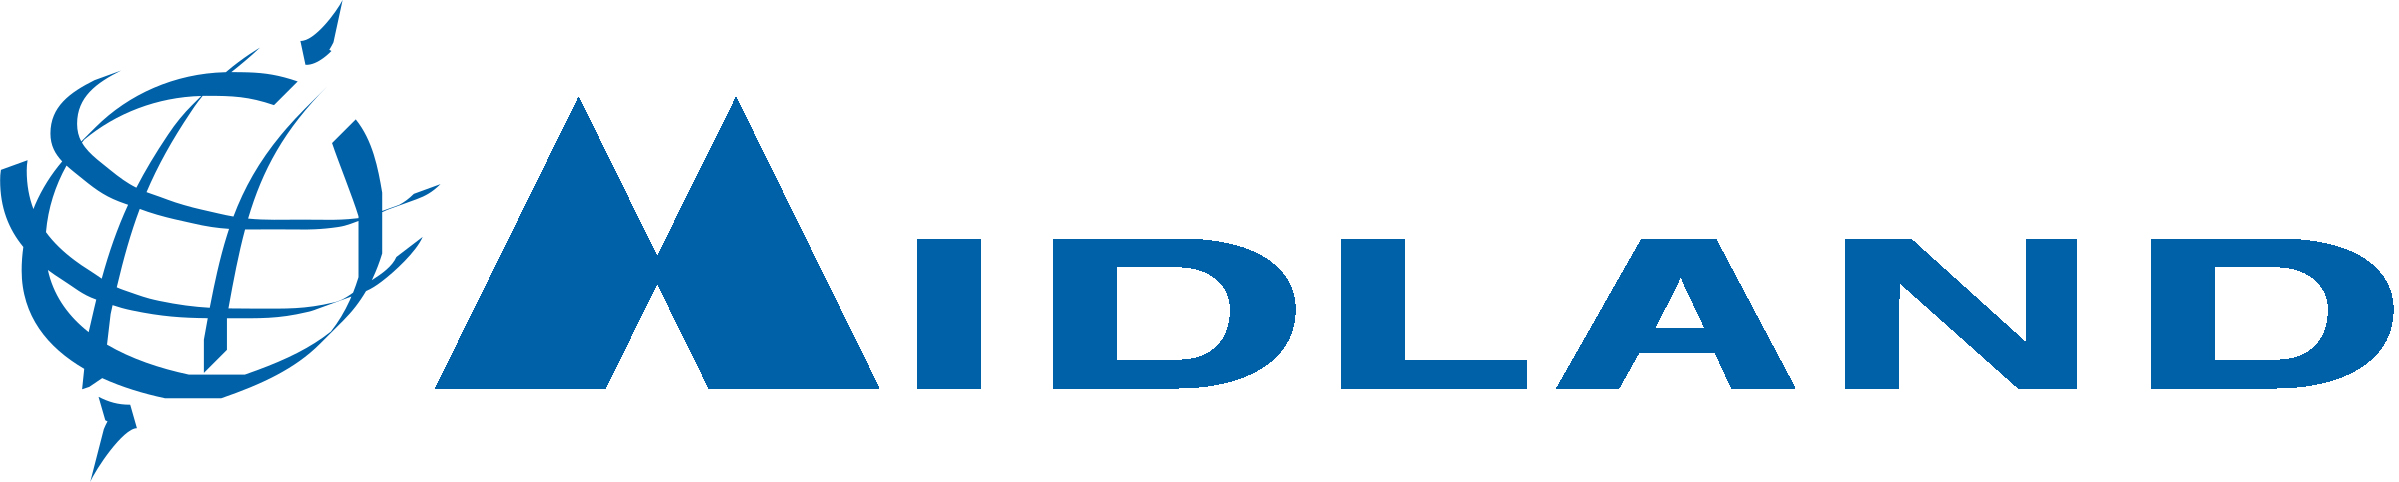 MIDLAND logo